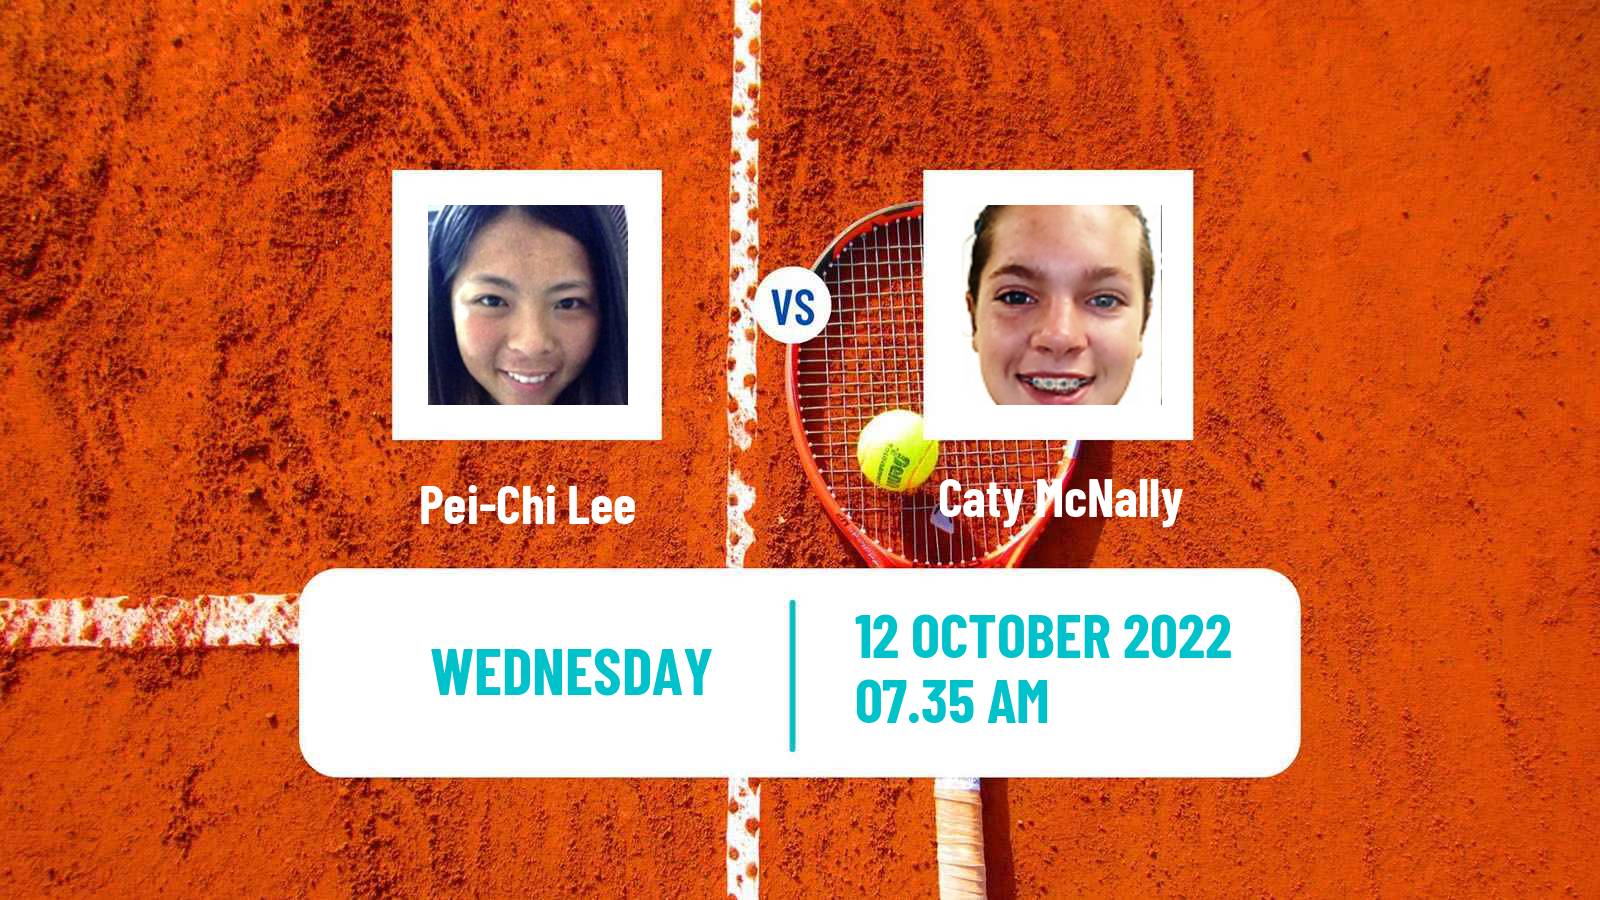 Tennis ITF Tournaments Pei-Chi Lee - Caty McNally